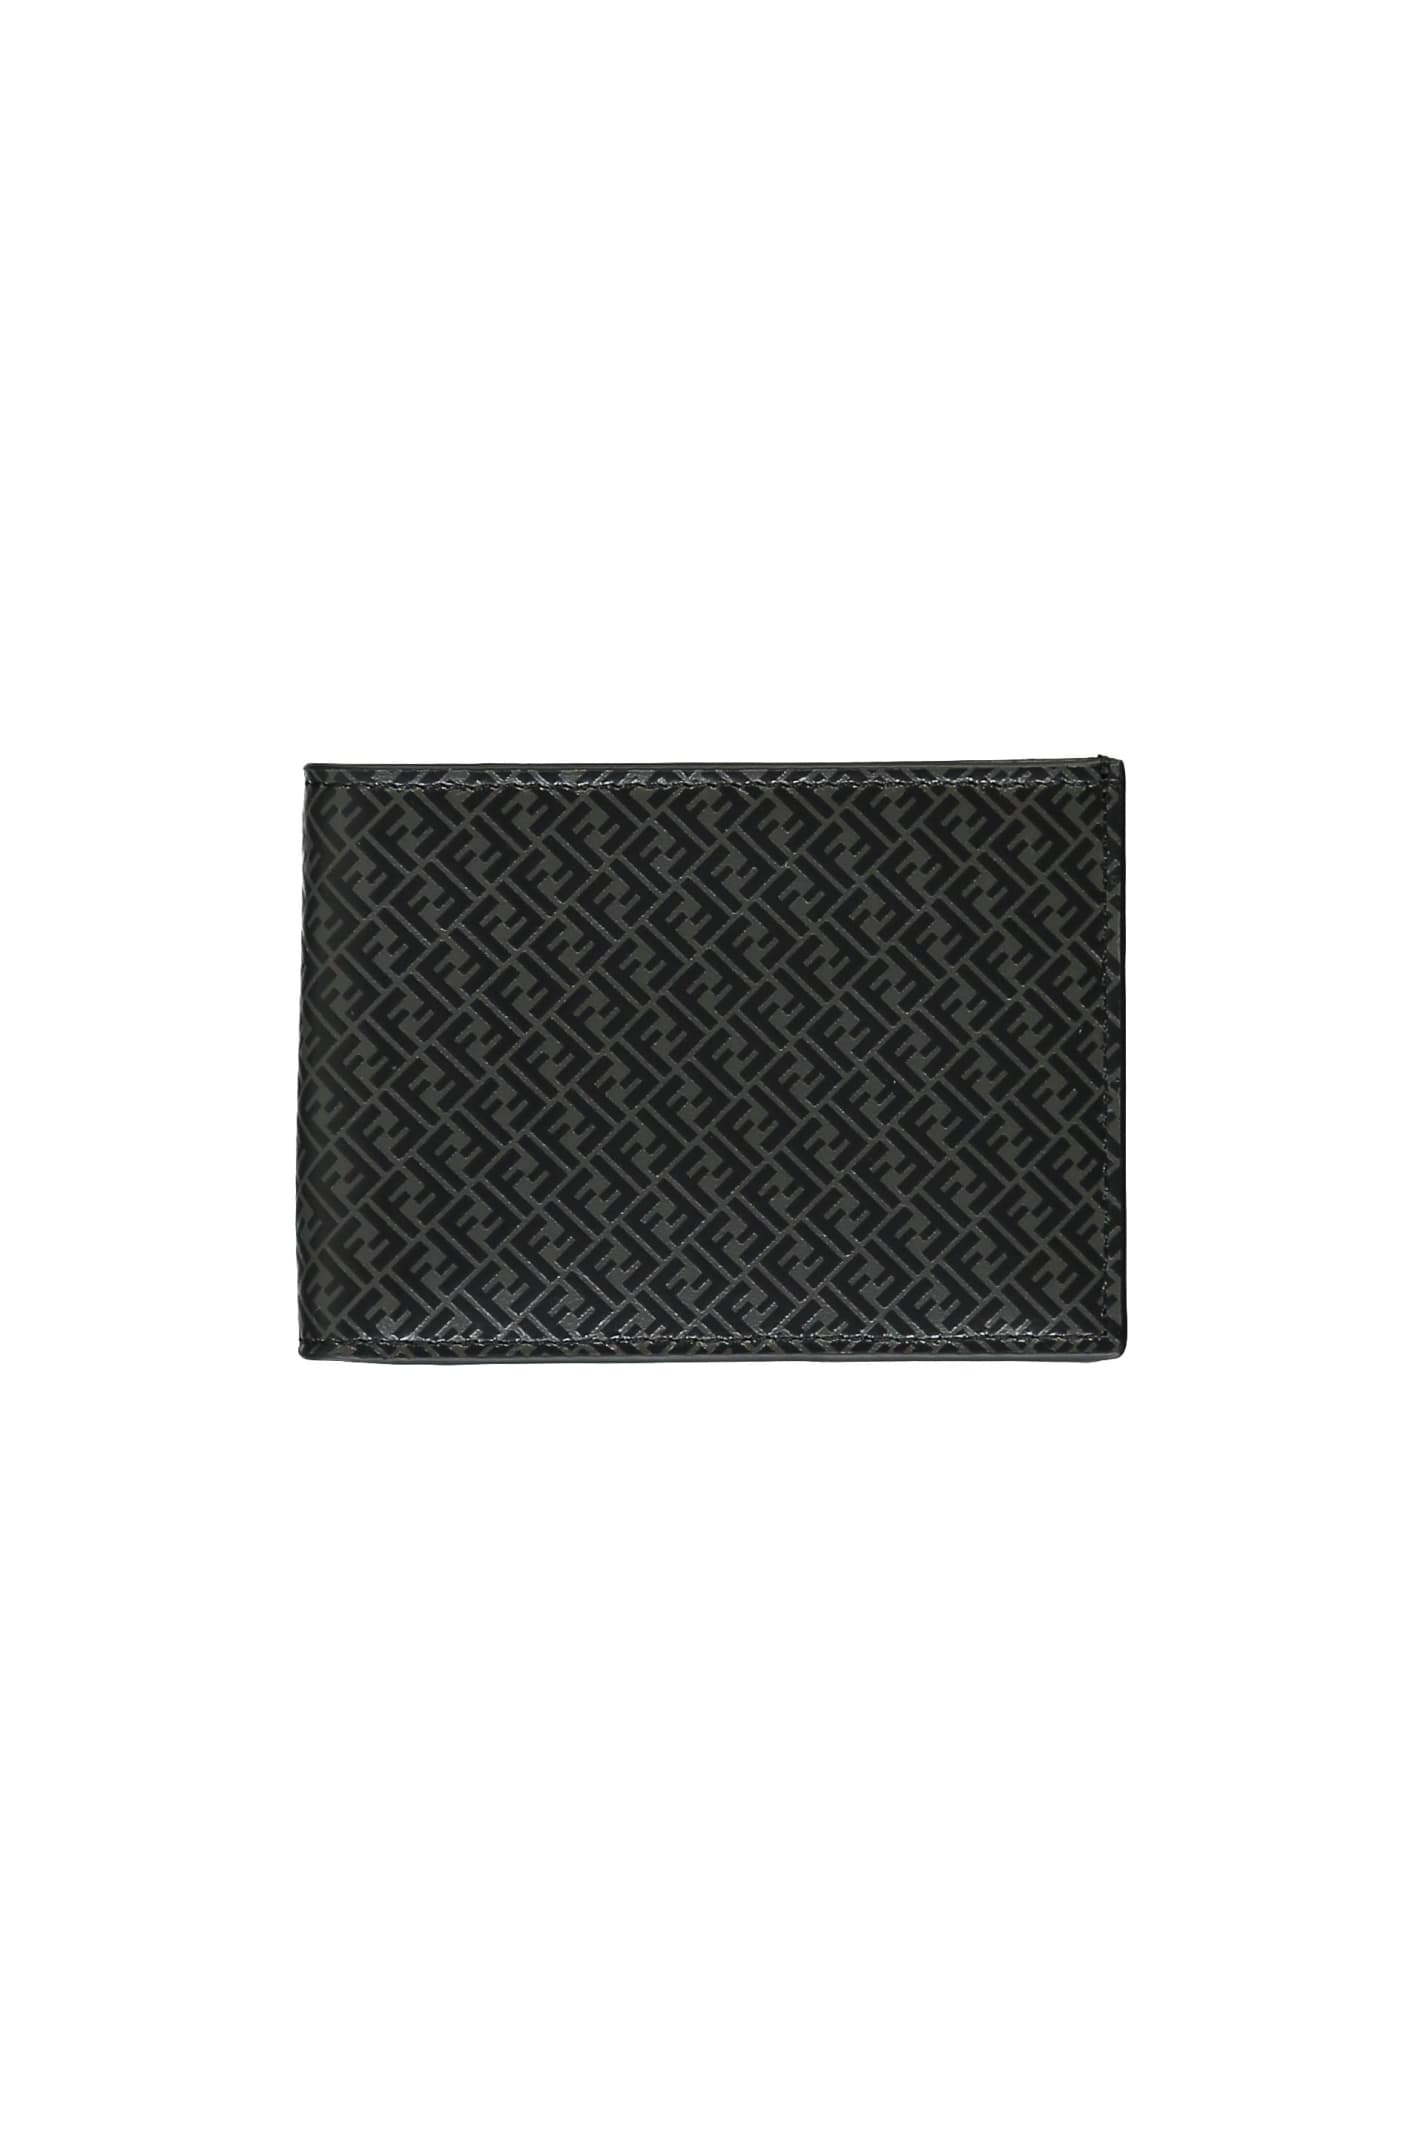 Fendi Flap-over Wallet In Black